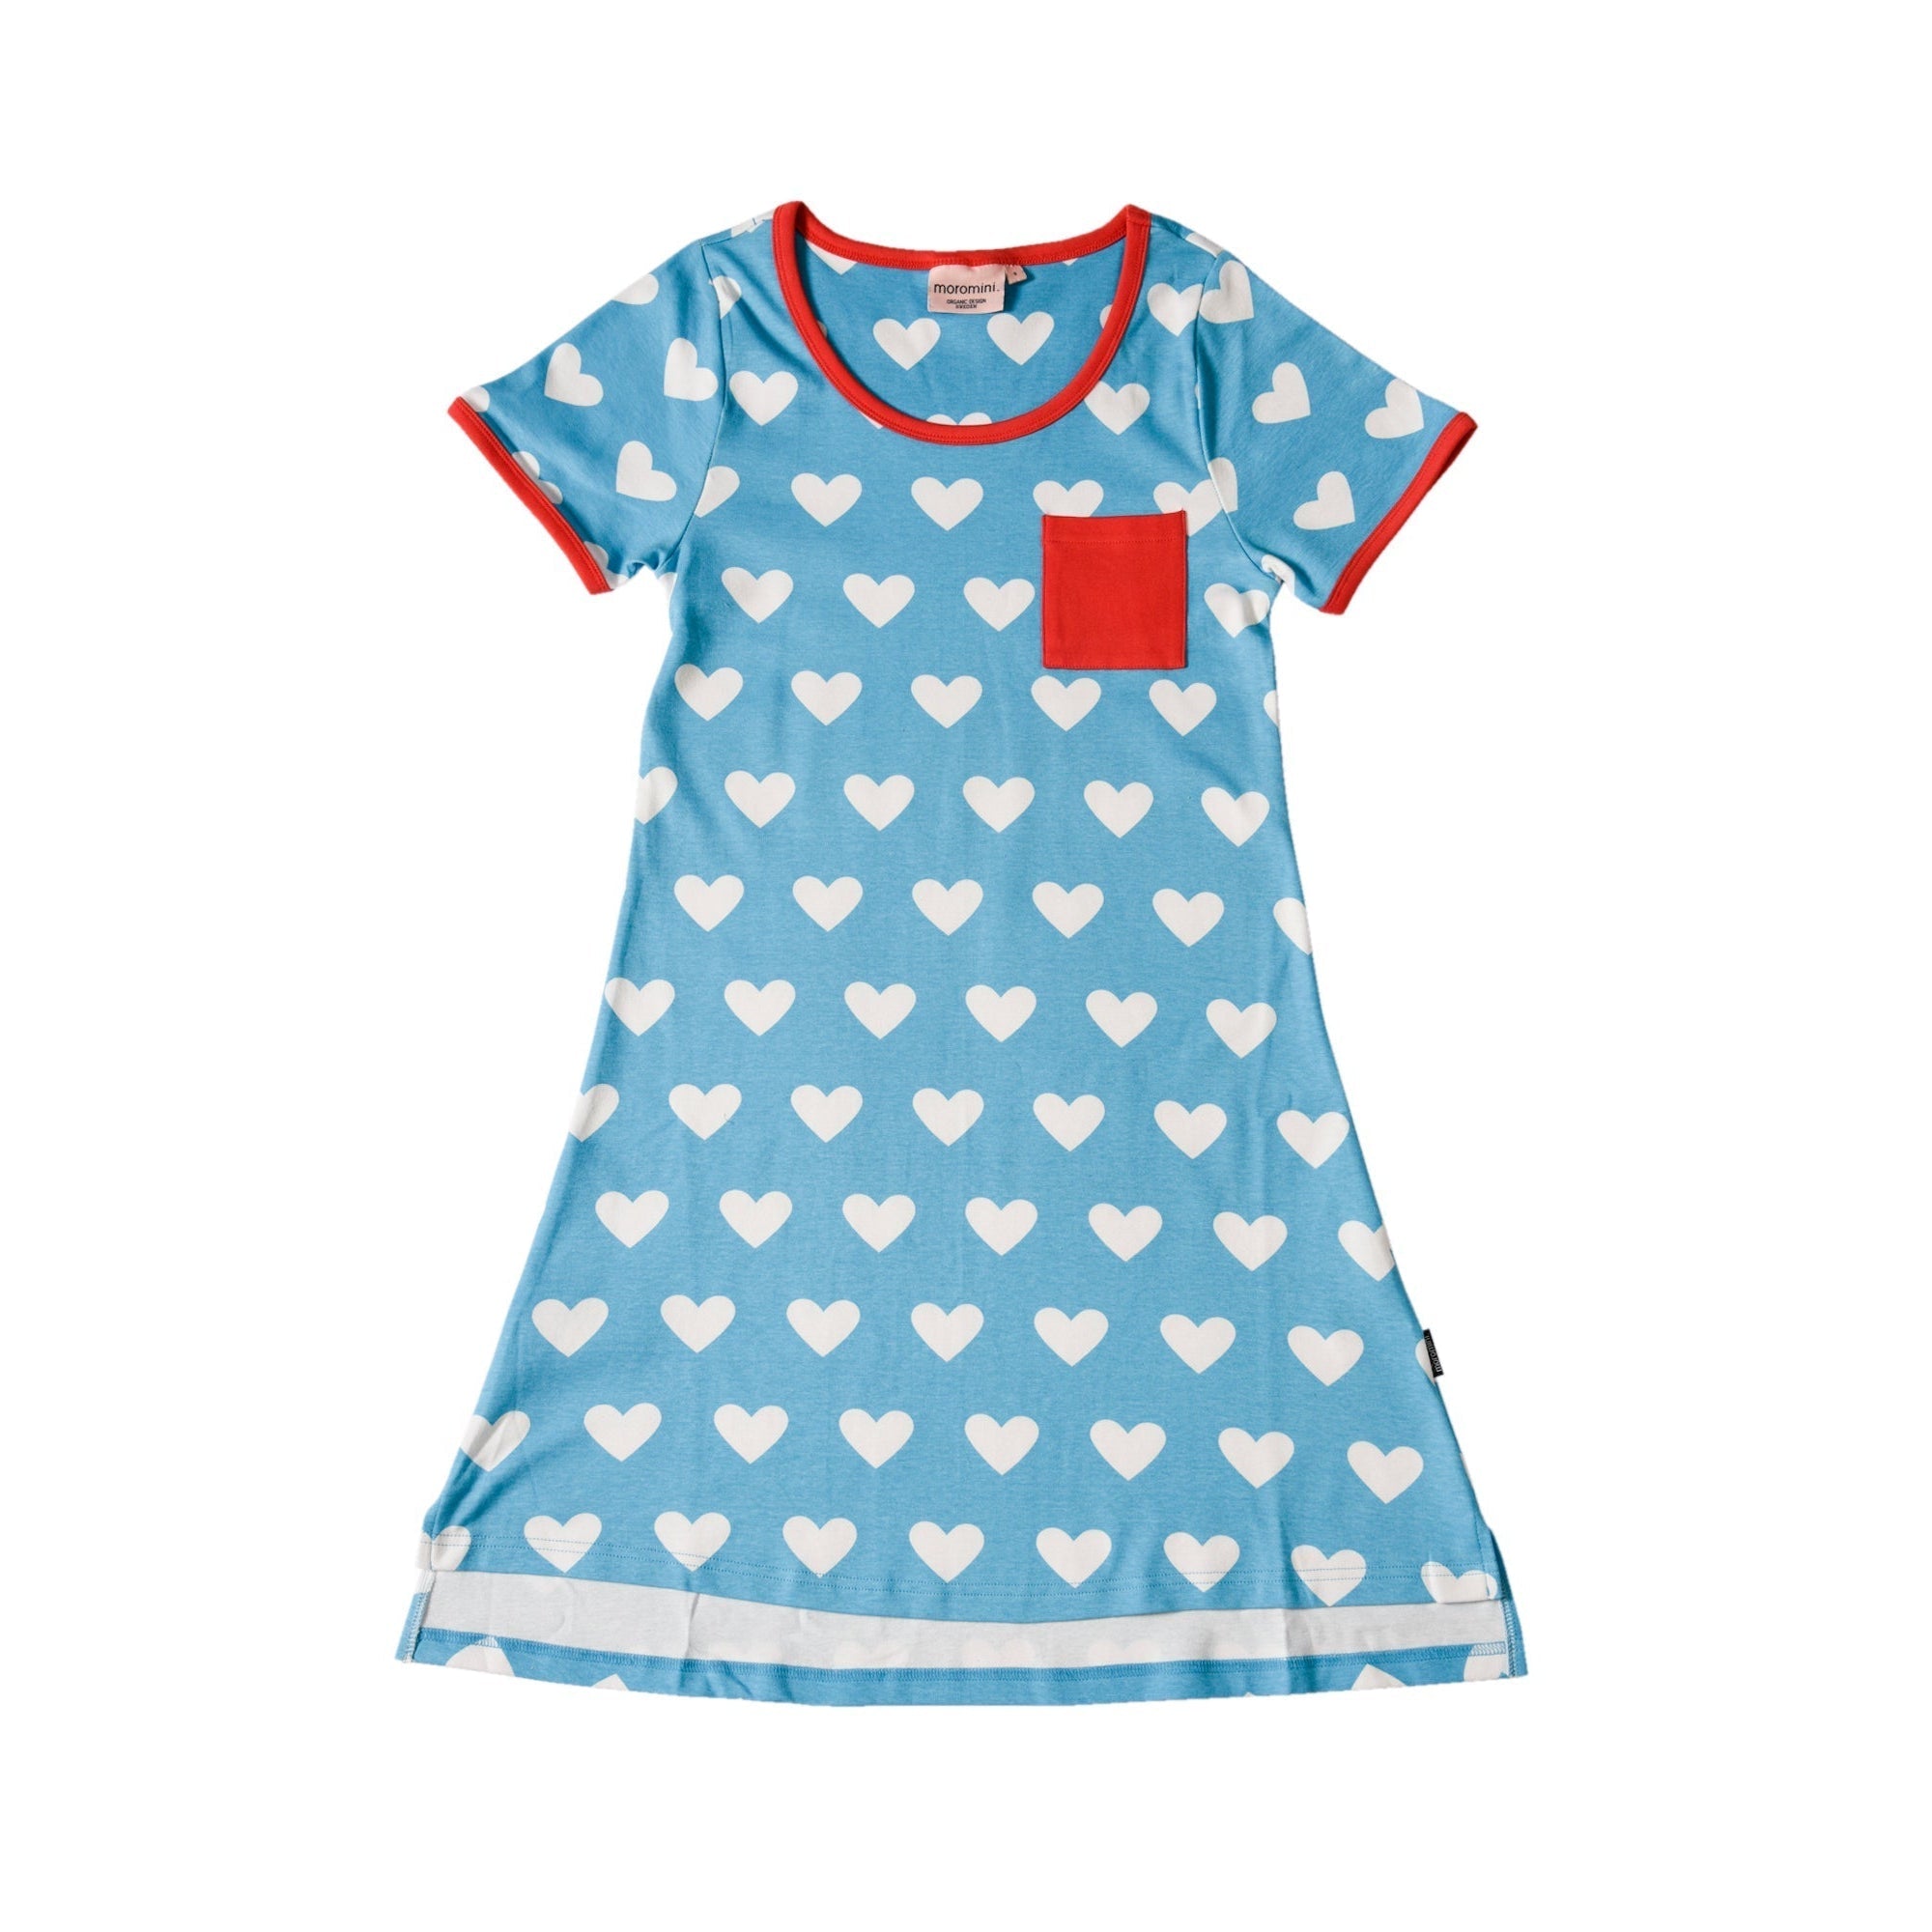 Adult's Blue Hearts Short Sleeve A-Line Dress - 1 Left Size XL-Moromini-Modern Rascals